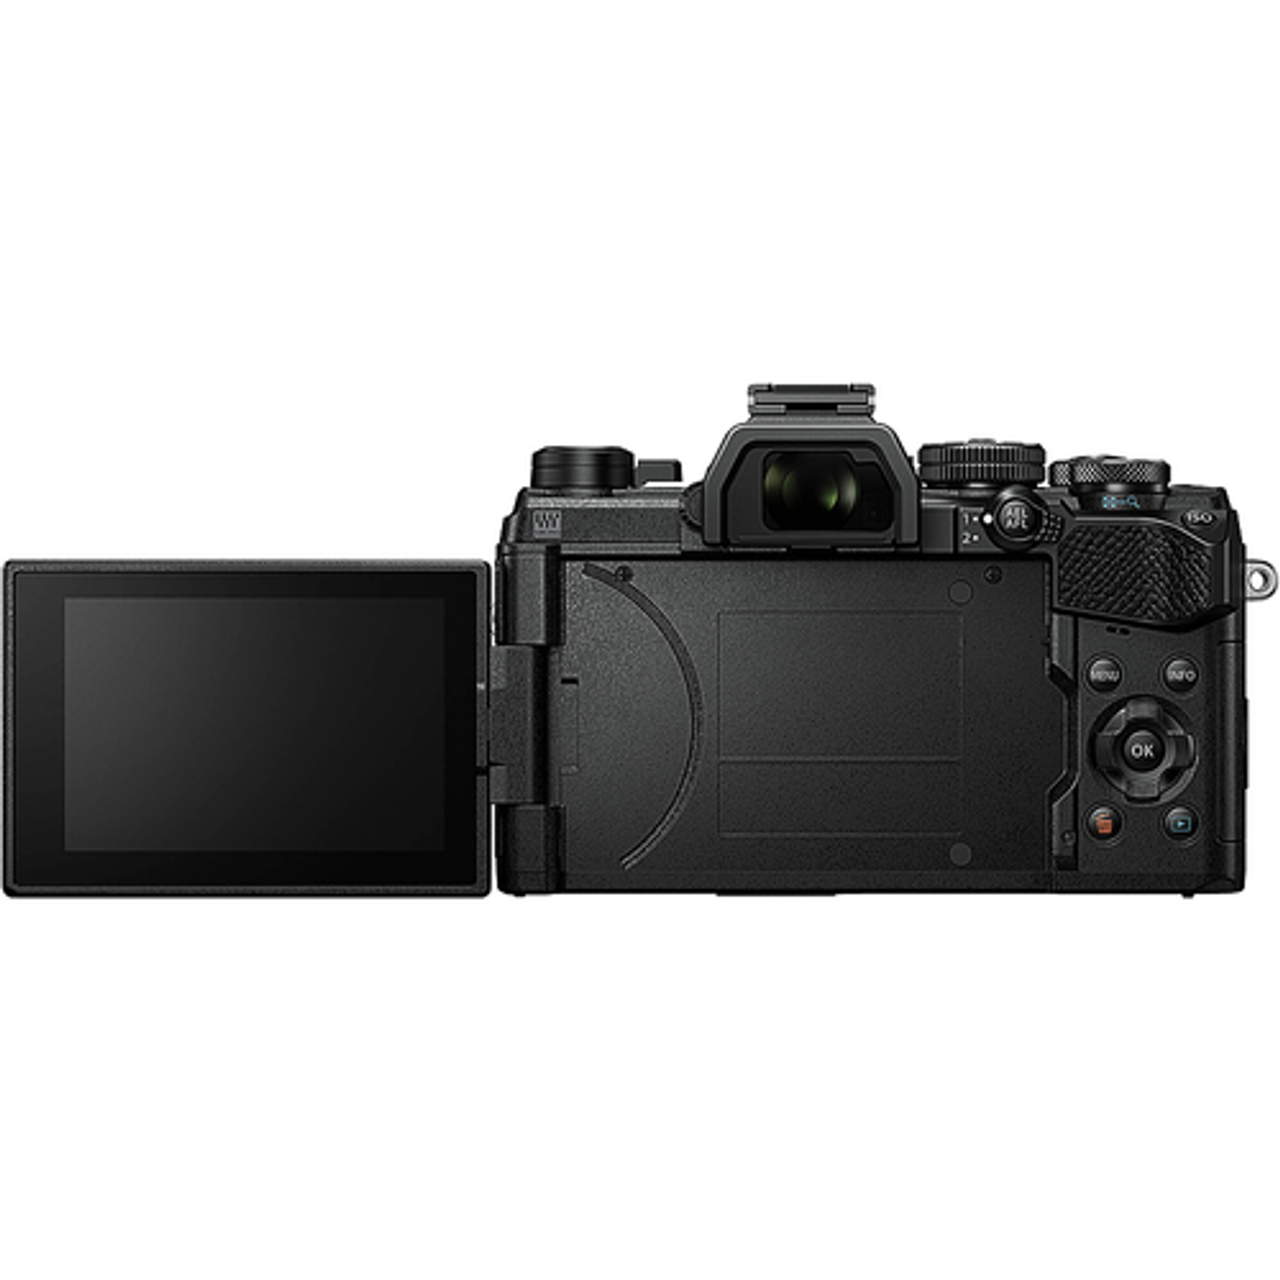 Olympus - OM5 20.4 Megapixel Mirrorless Camera (Body Only)